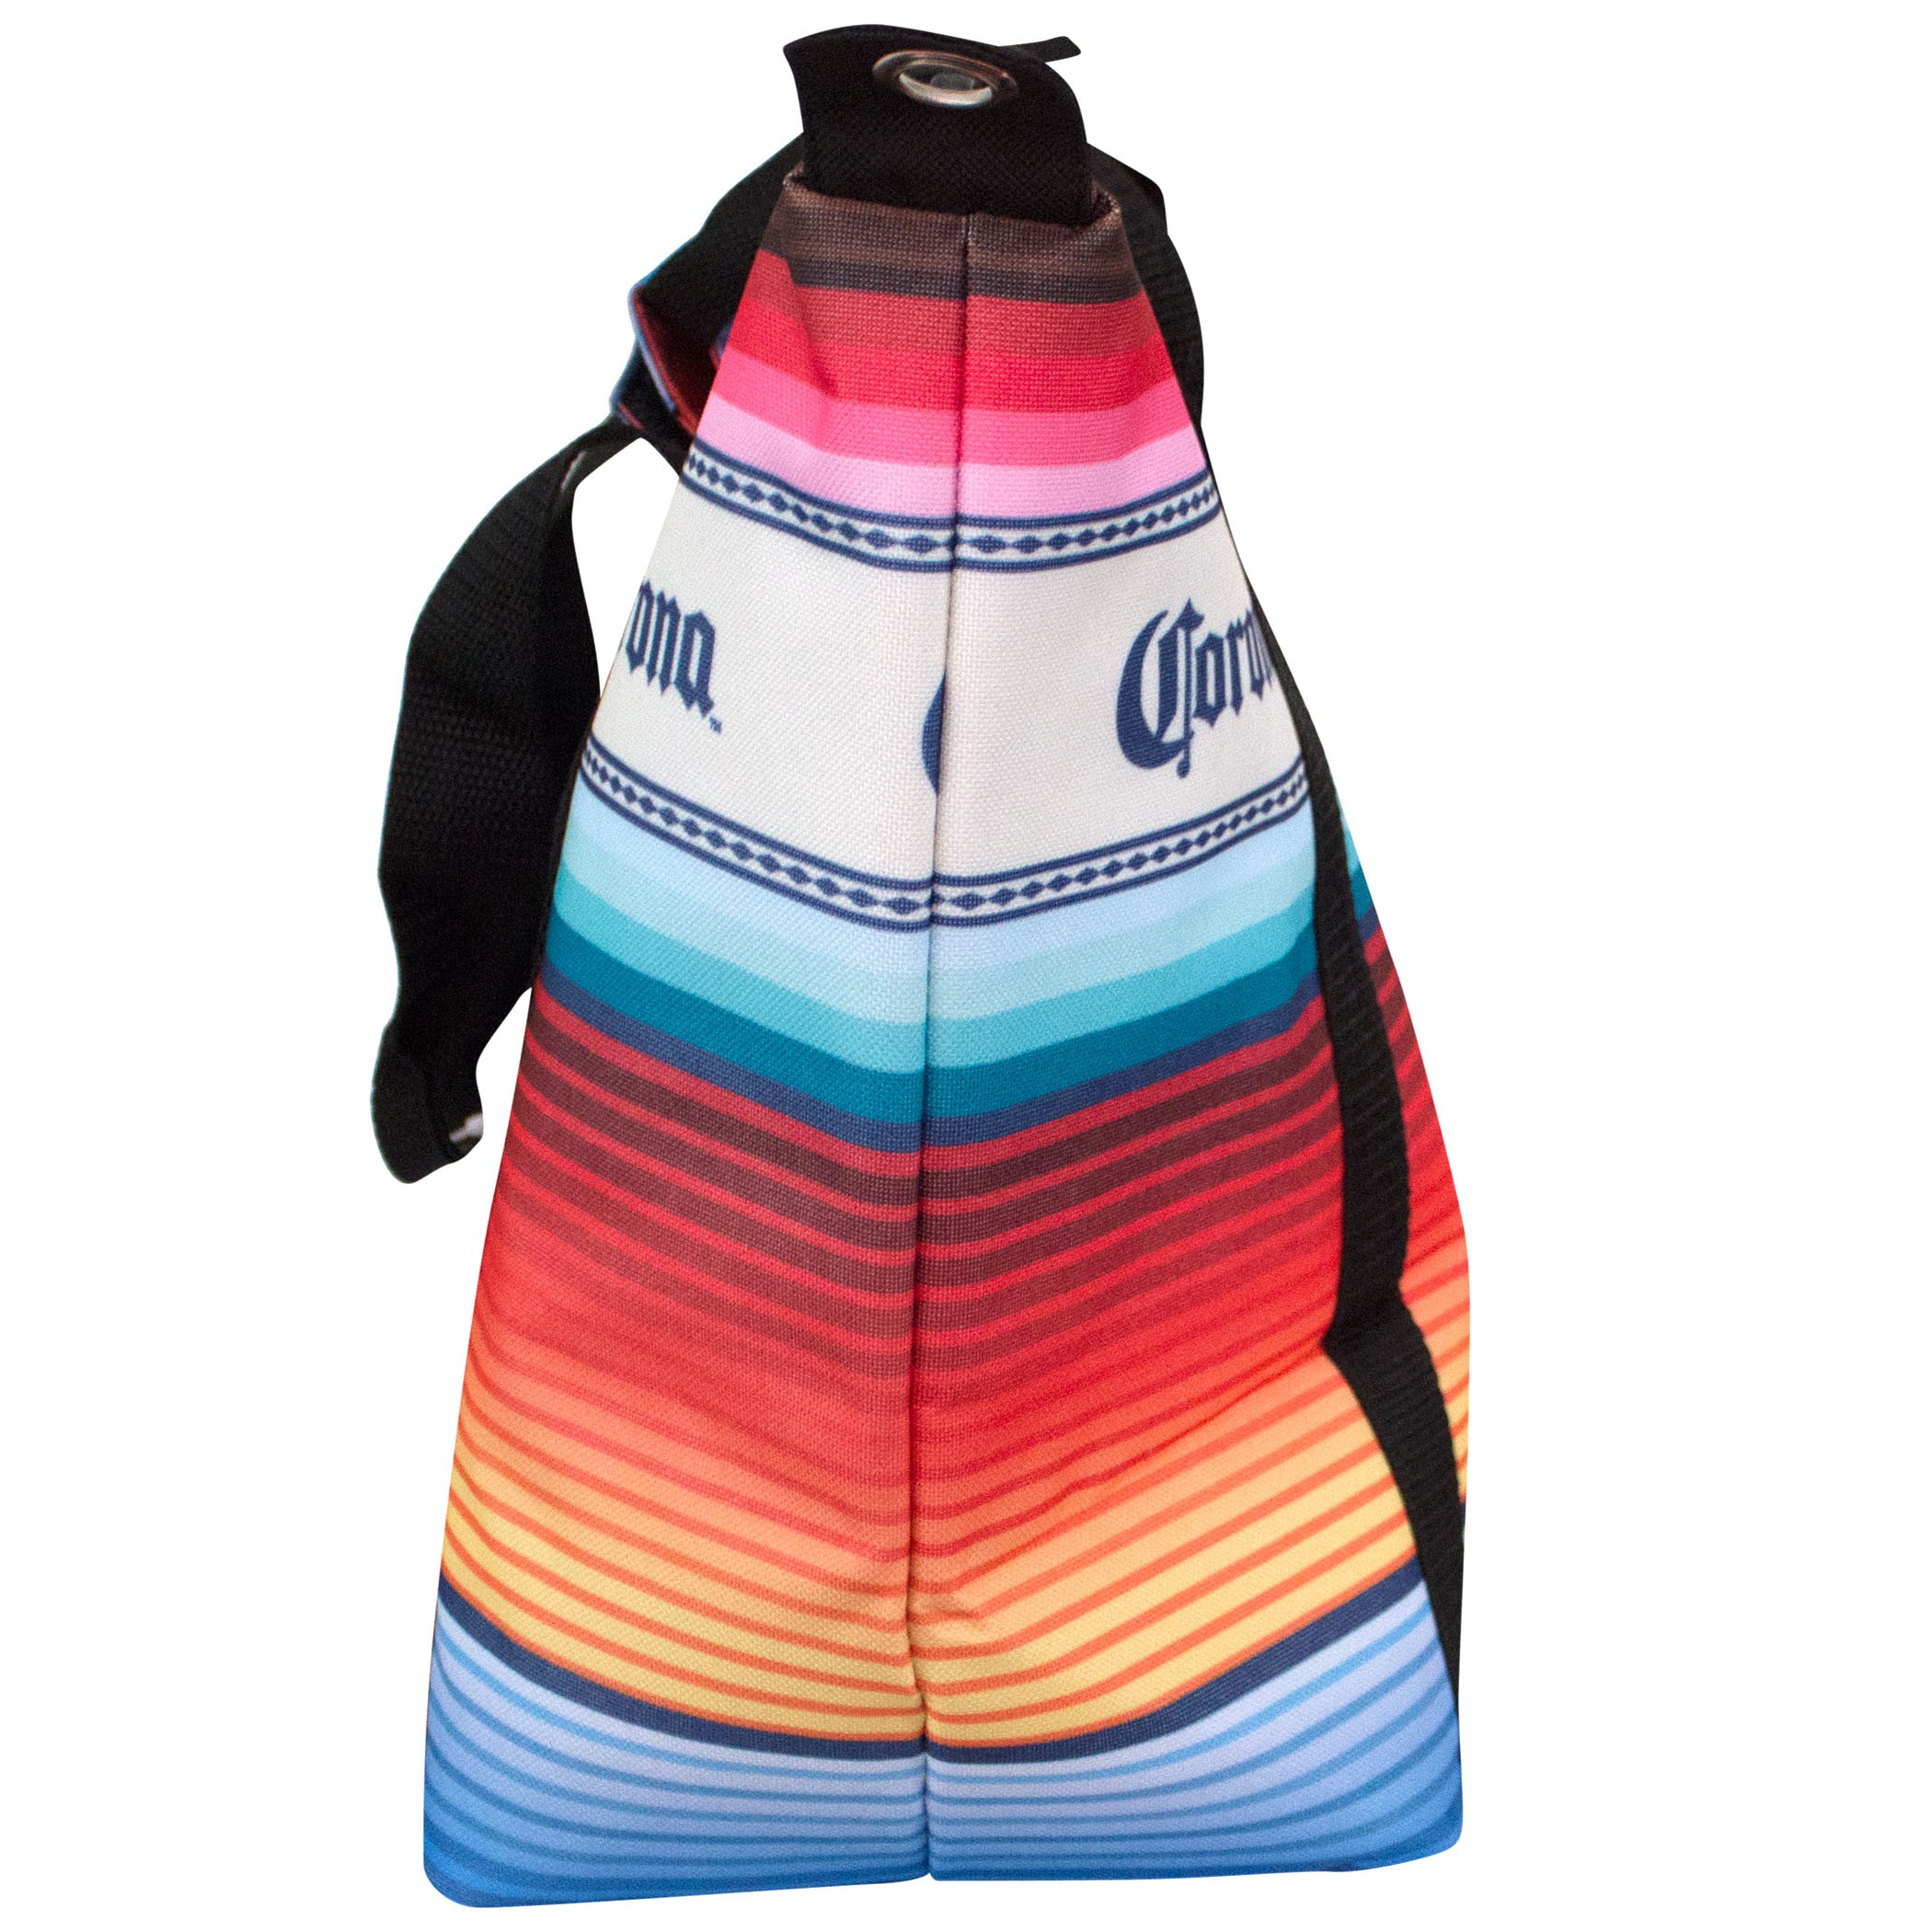 Corona Extra Multicolored Cooler Bag